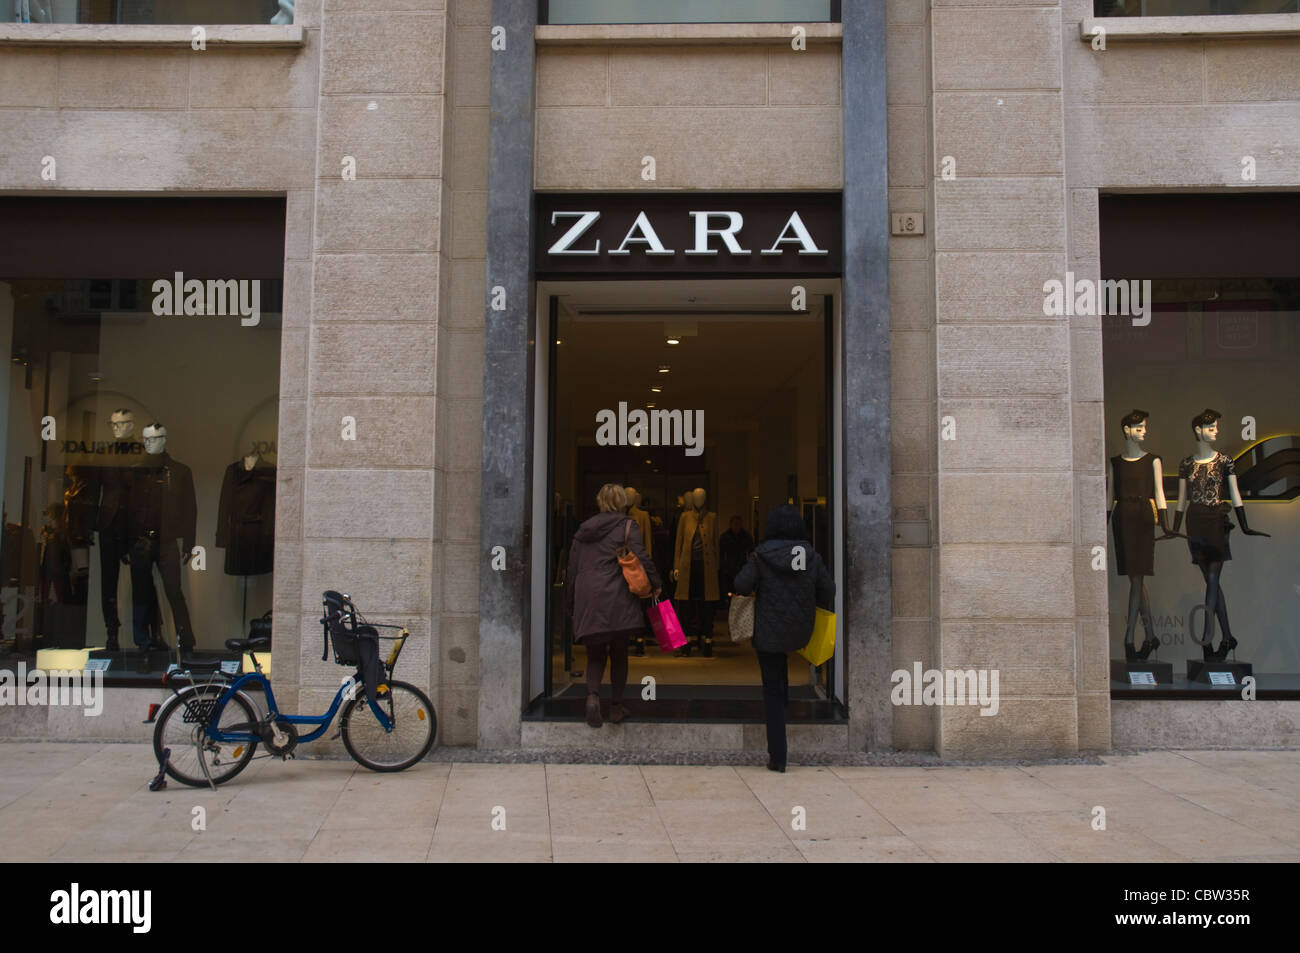 Valencia People shopping outside Zara store Spain Europe street